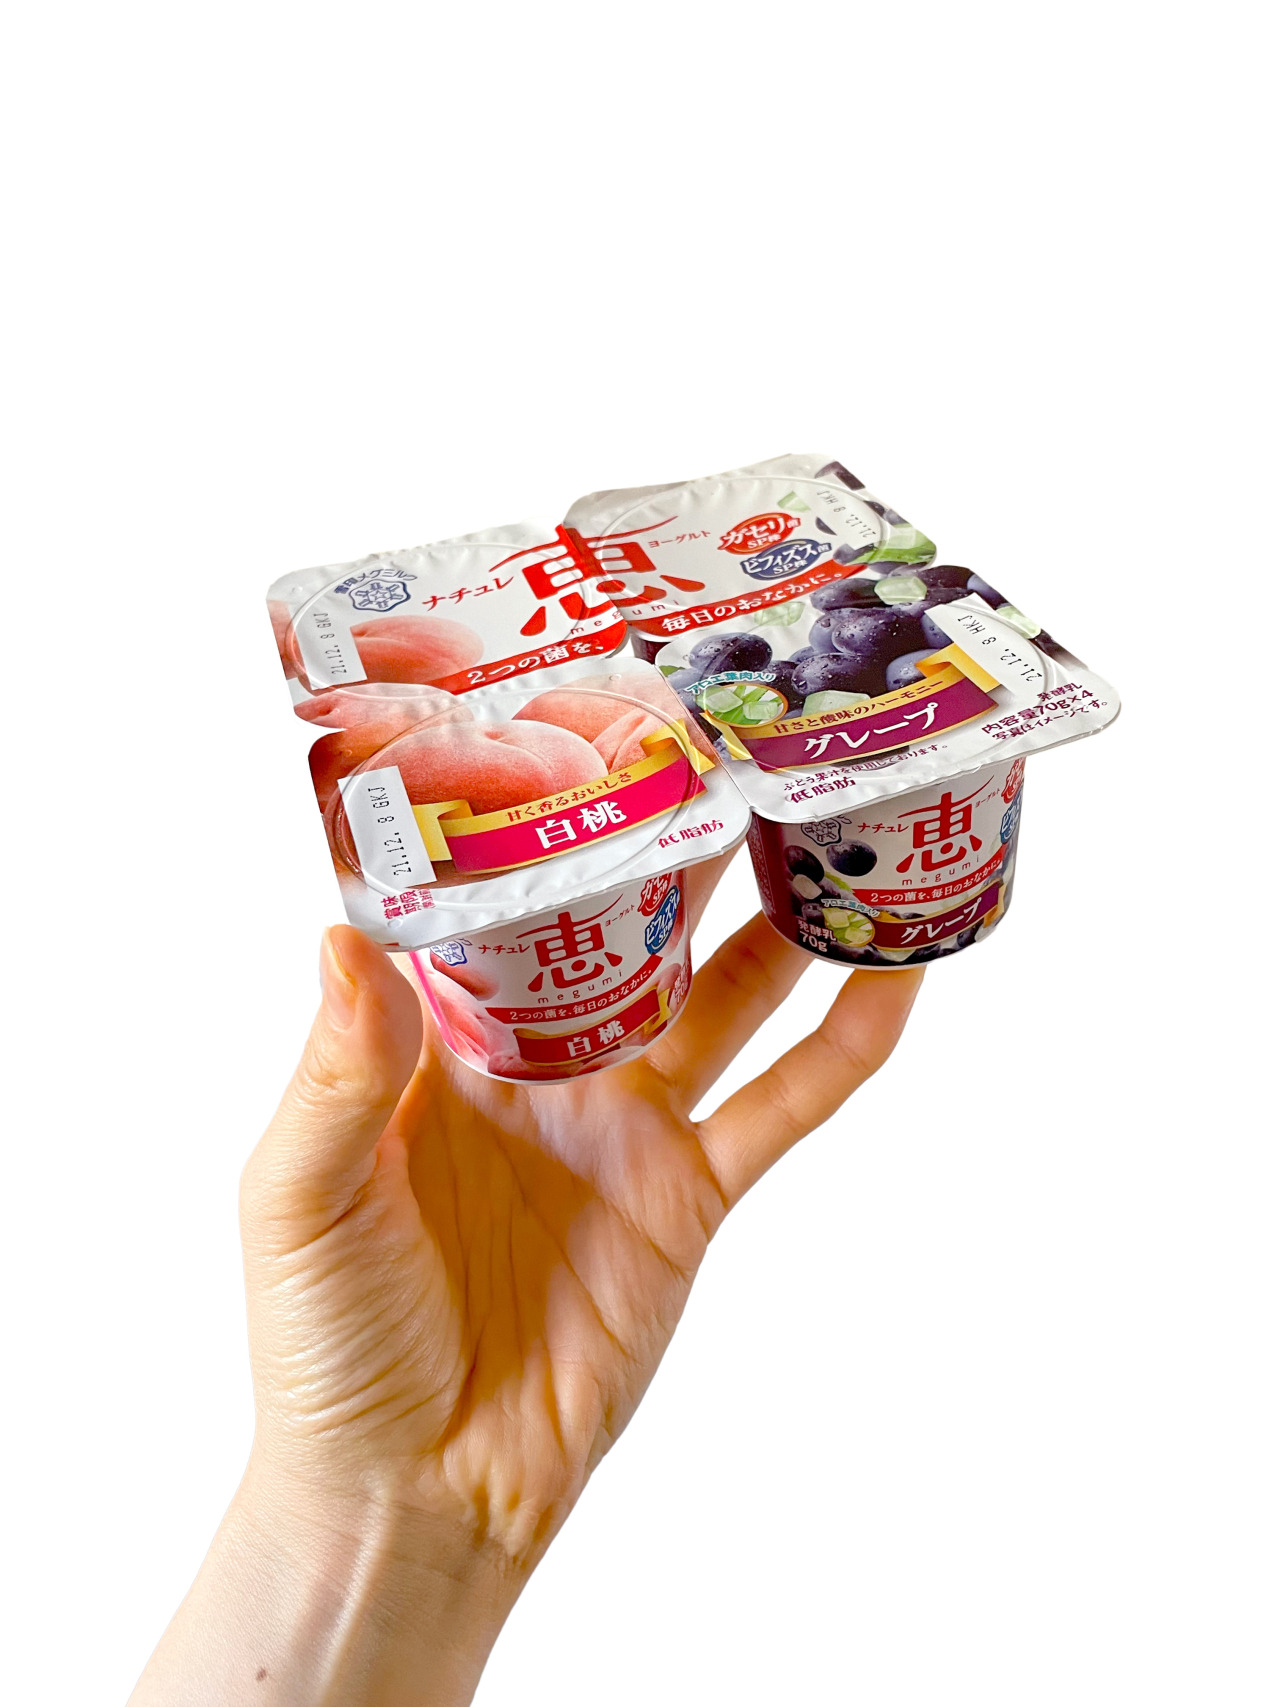 Yoghurt — ナチュレ 恵 megumi ヨーグルト 白桃 いよいよ最後のアソート。 今回は左列の白桃から🍑